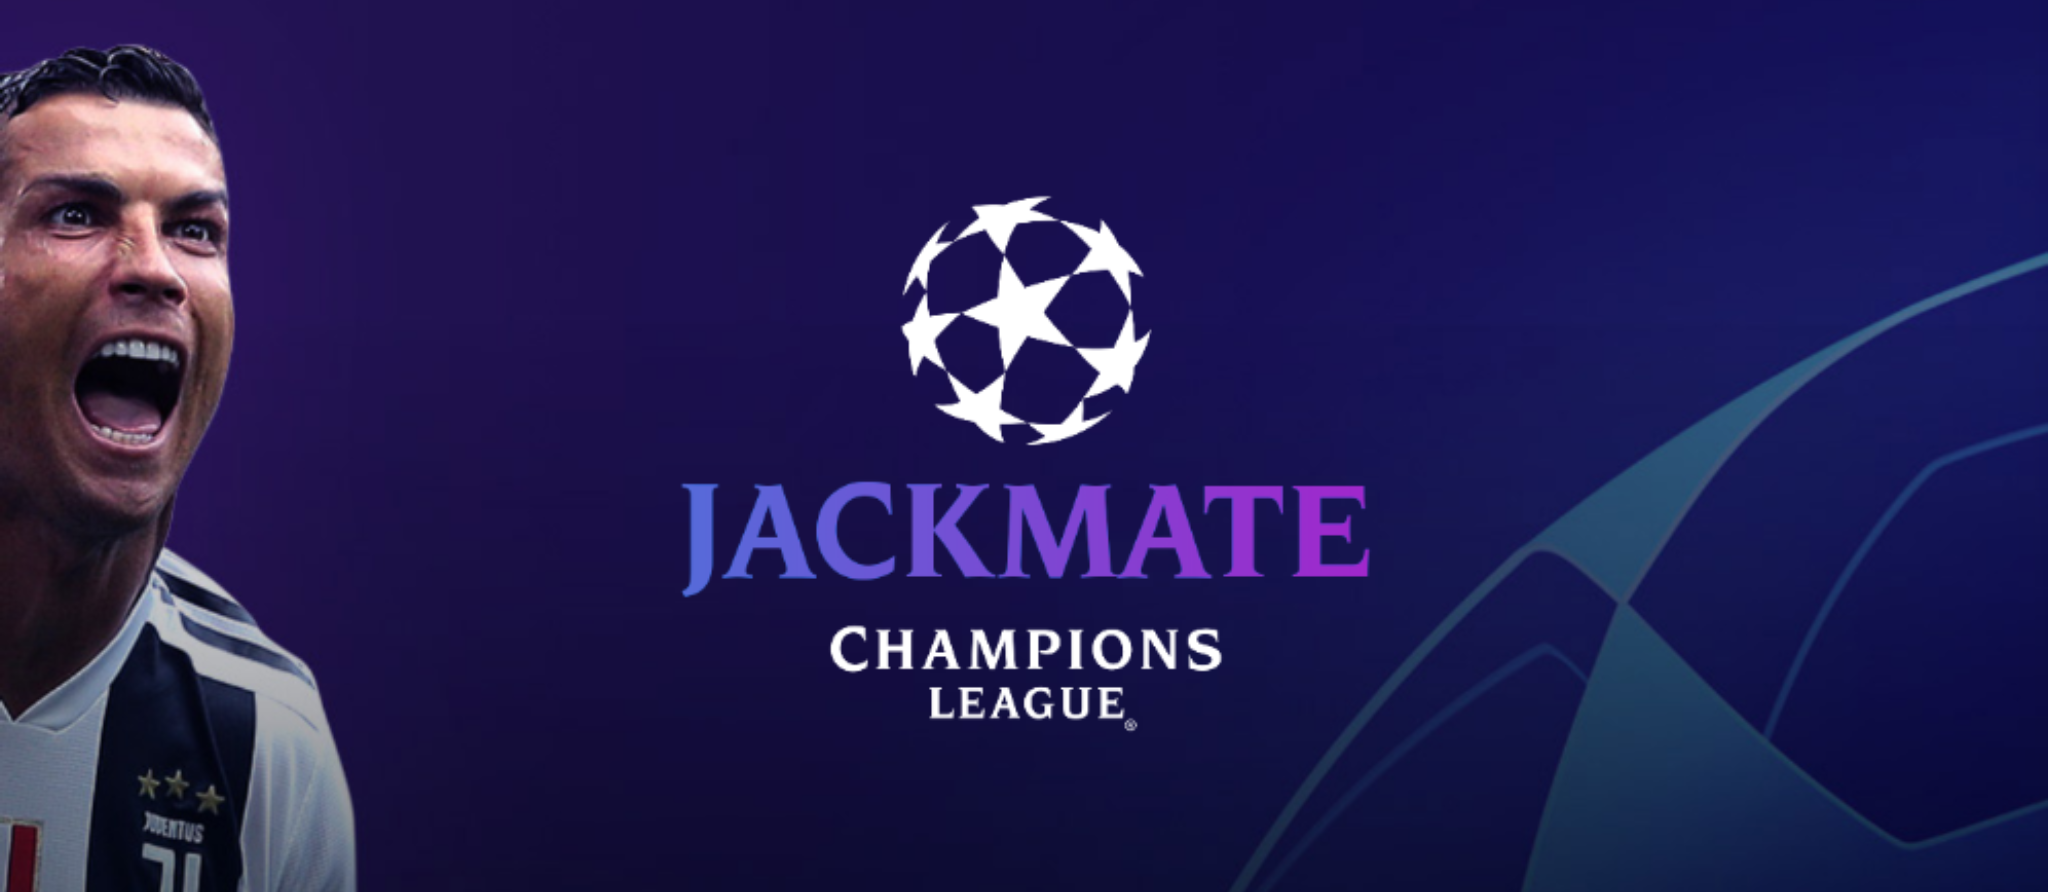 2019 uefa champions league bracket